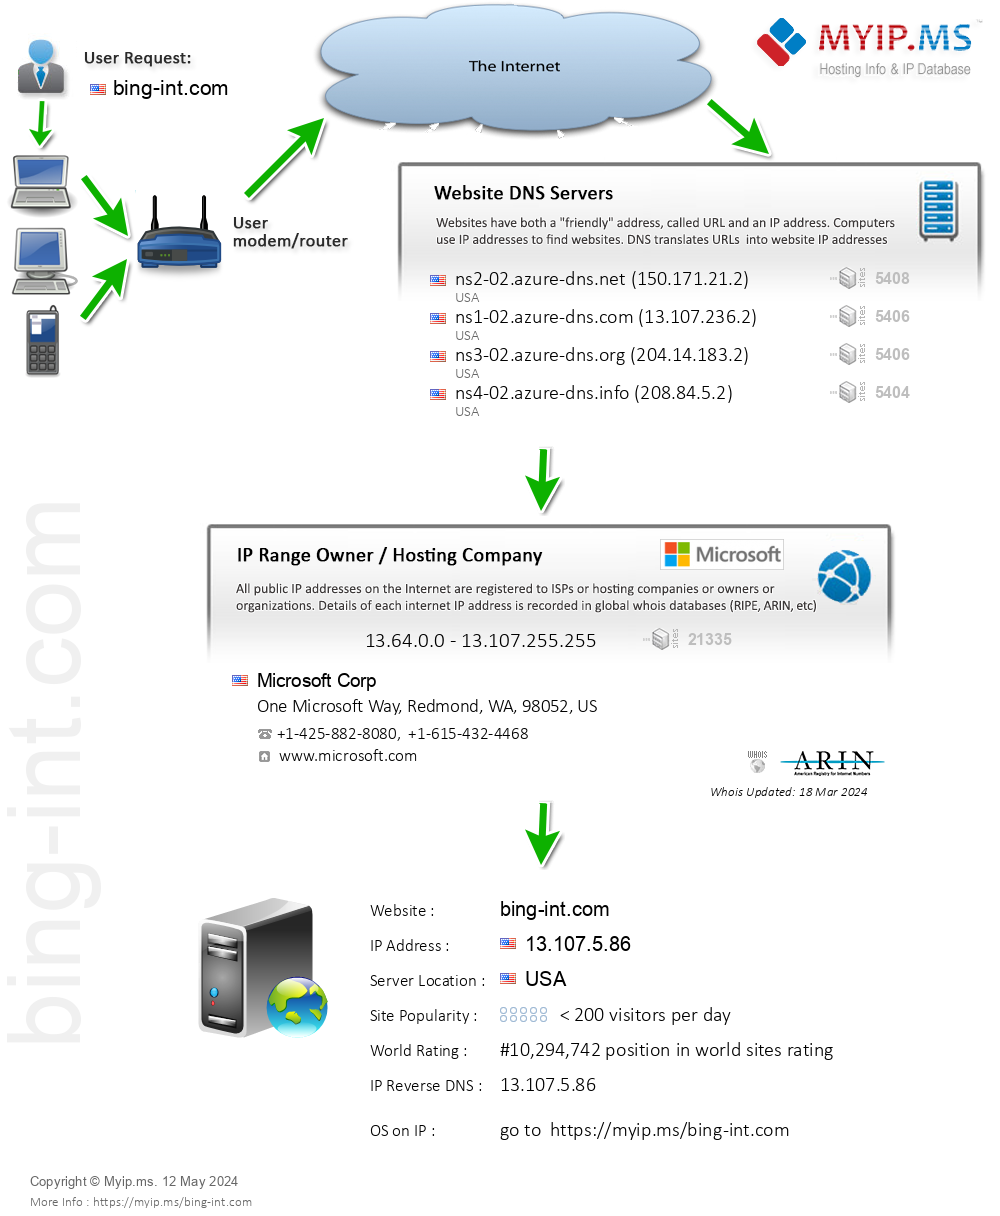 Bing-int.com - Website Hosting Visual IP Diagram